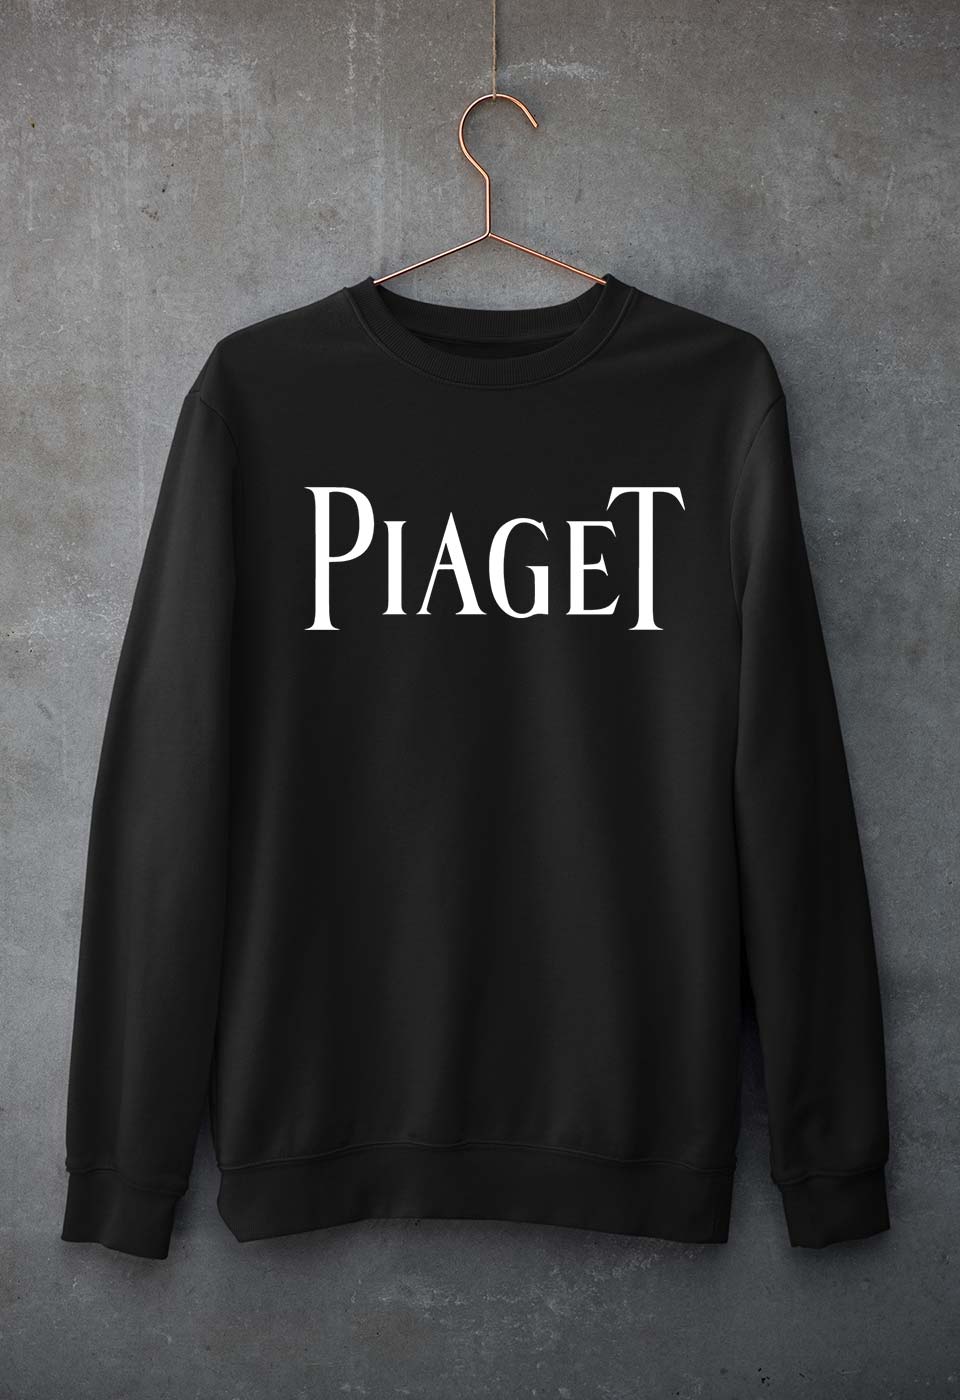 Piaget SA Unisex Sweatshirt for Men/Women-S(40 Inches)-Black-Ektarfa.online